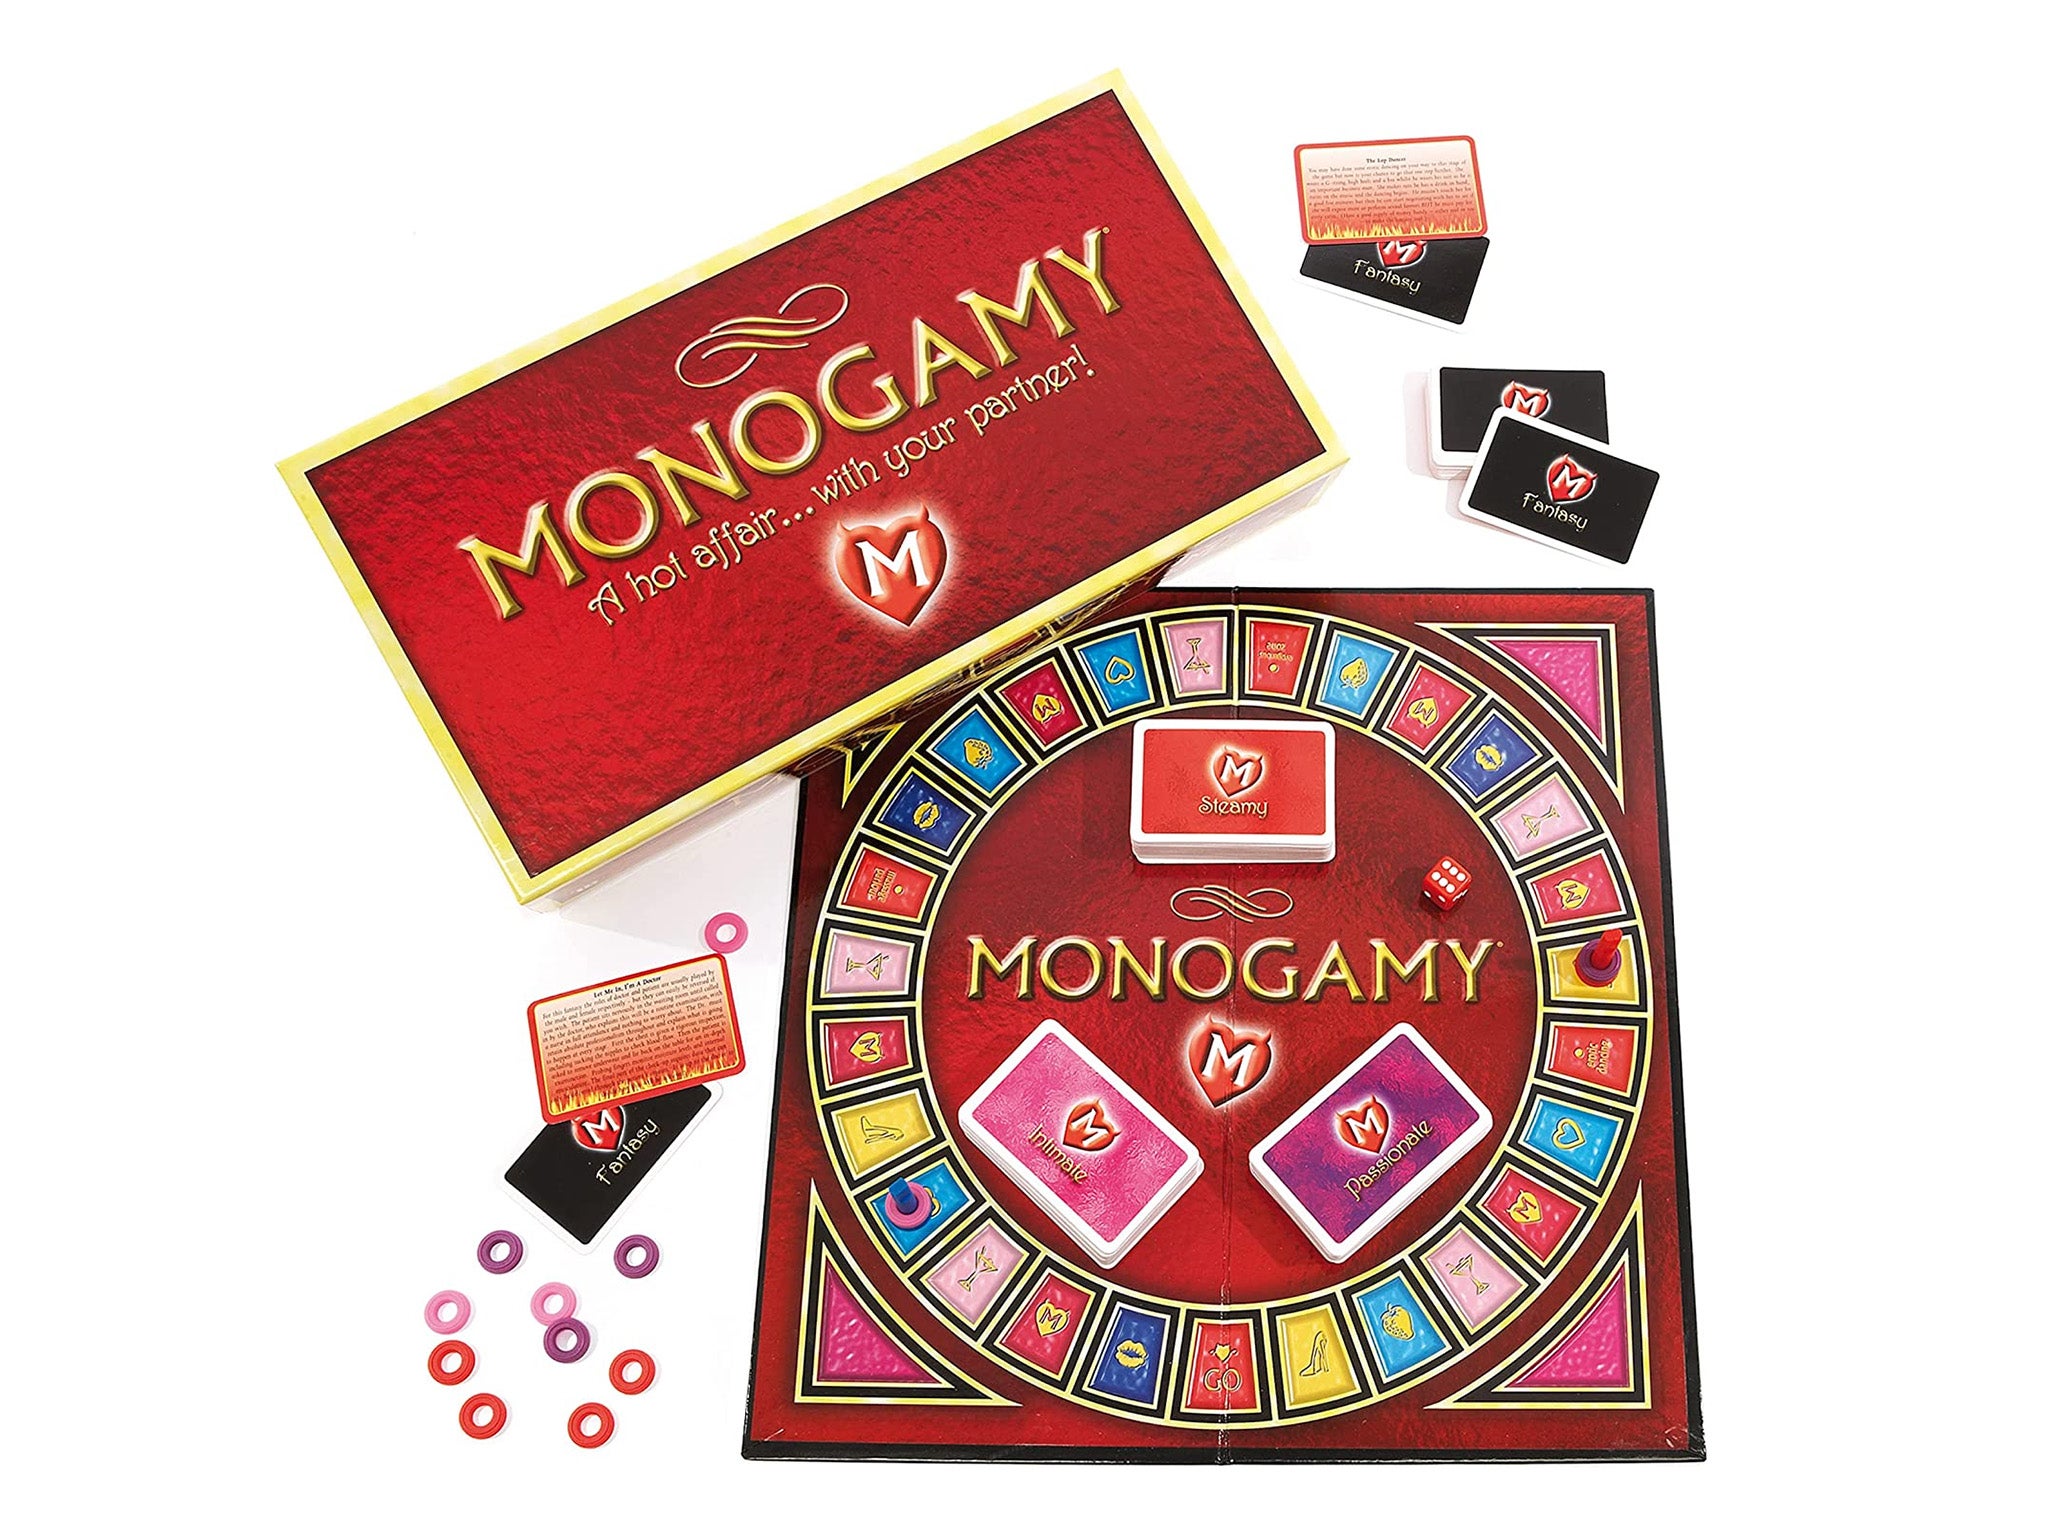 Monogamy couples board game